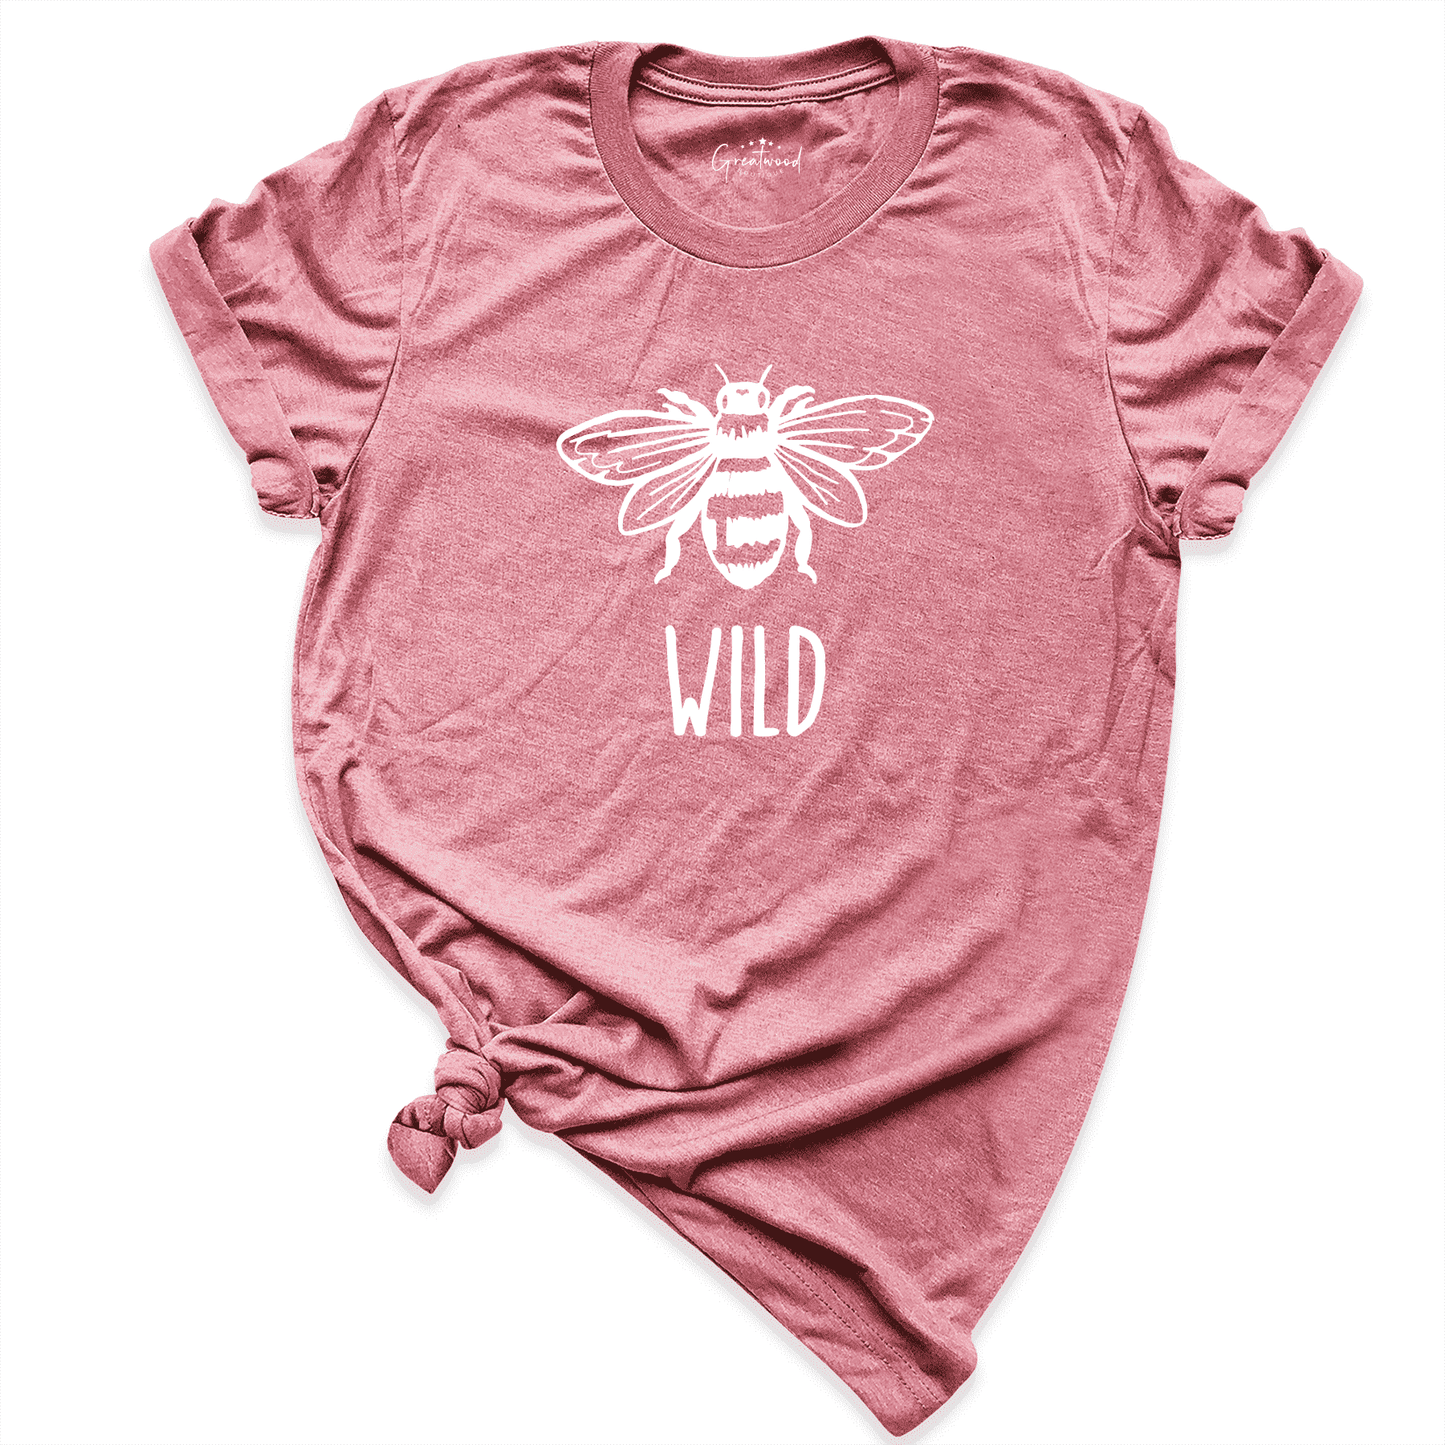 Wild Bee Family Shirt